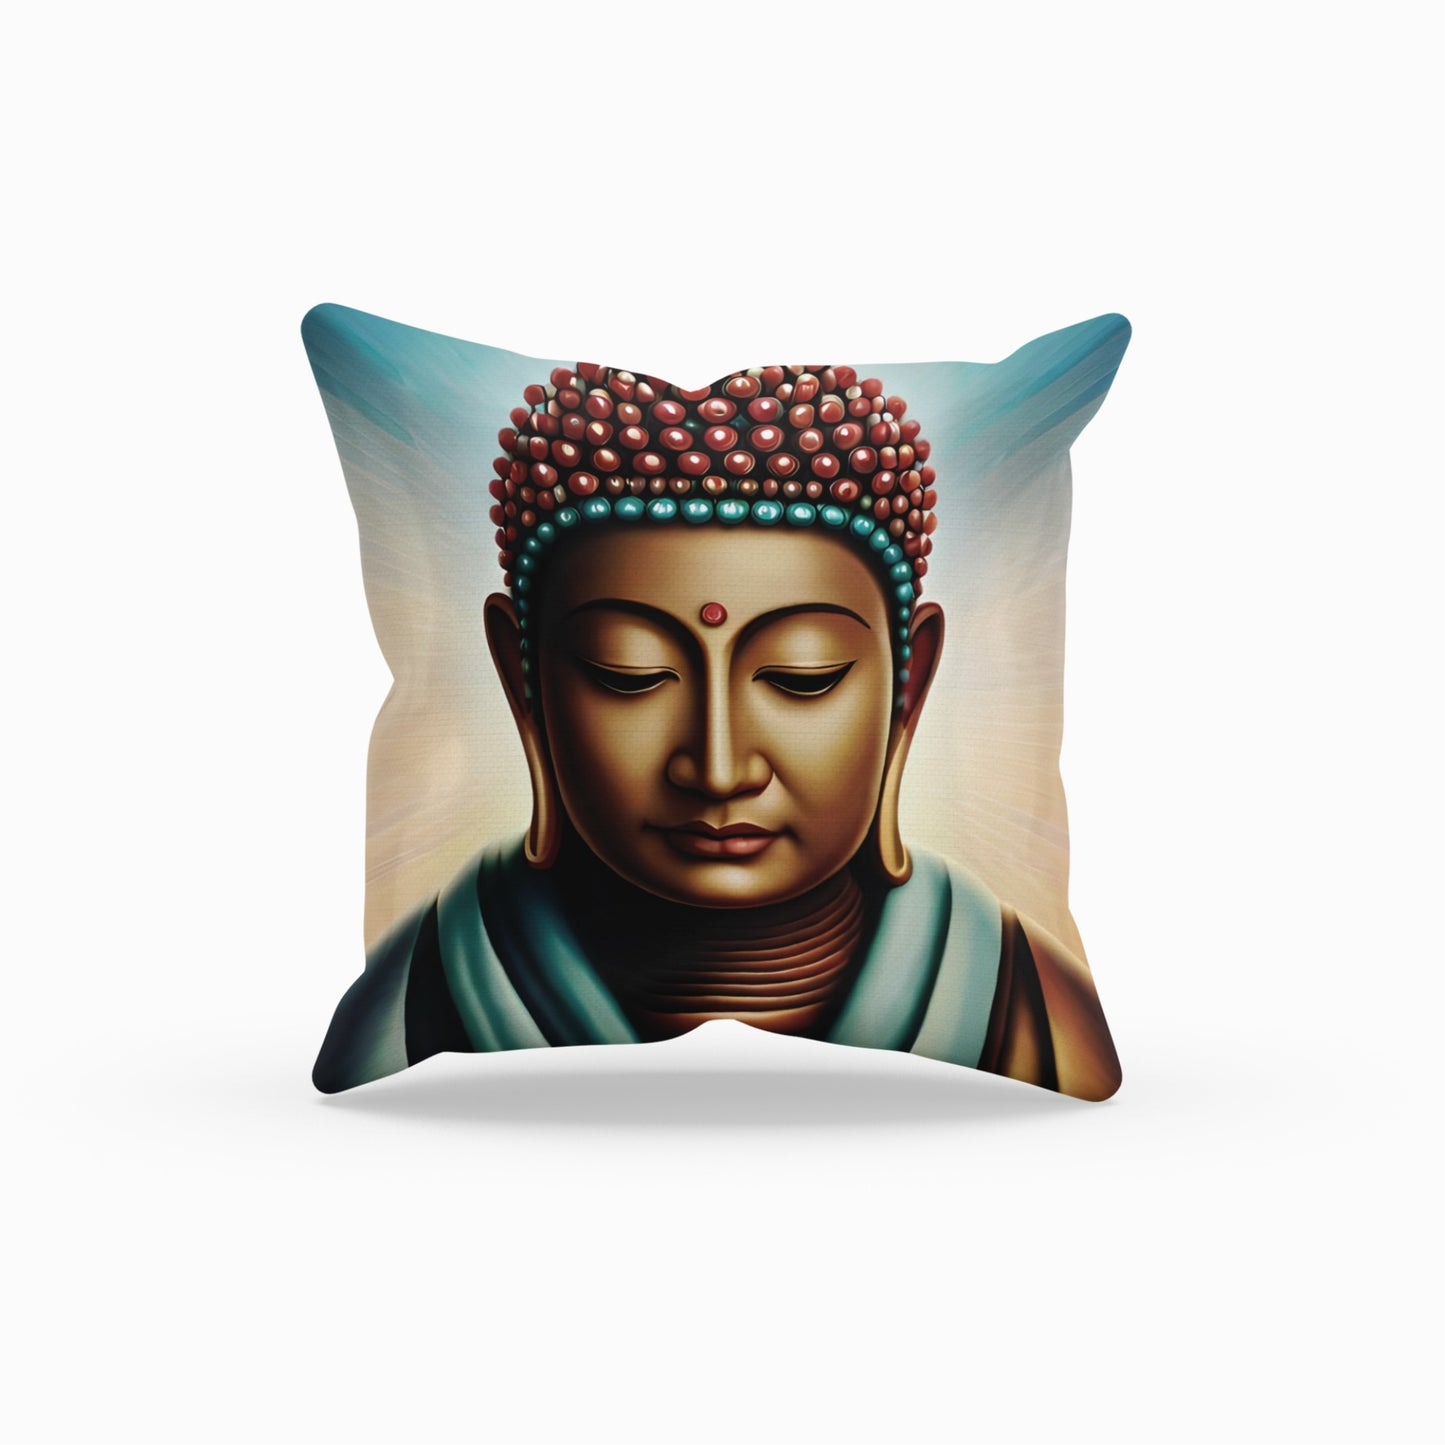 Meditative Buddha Art Throw Pillow